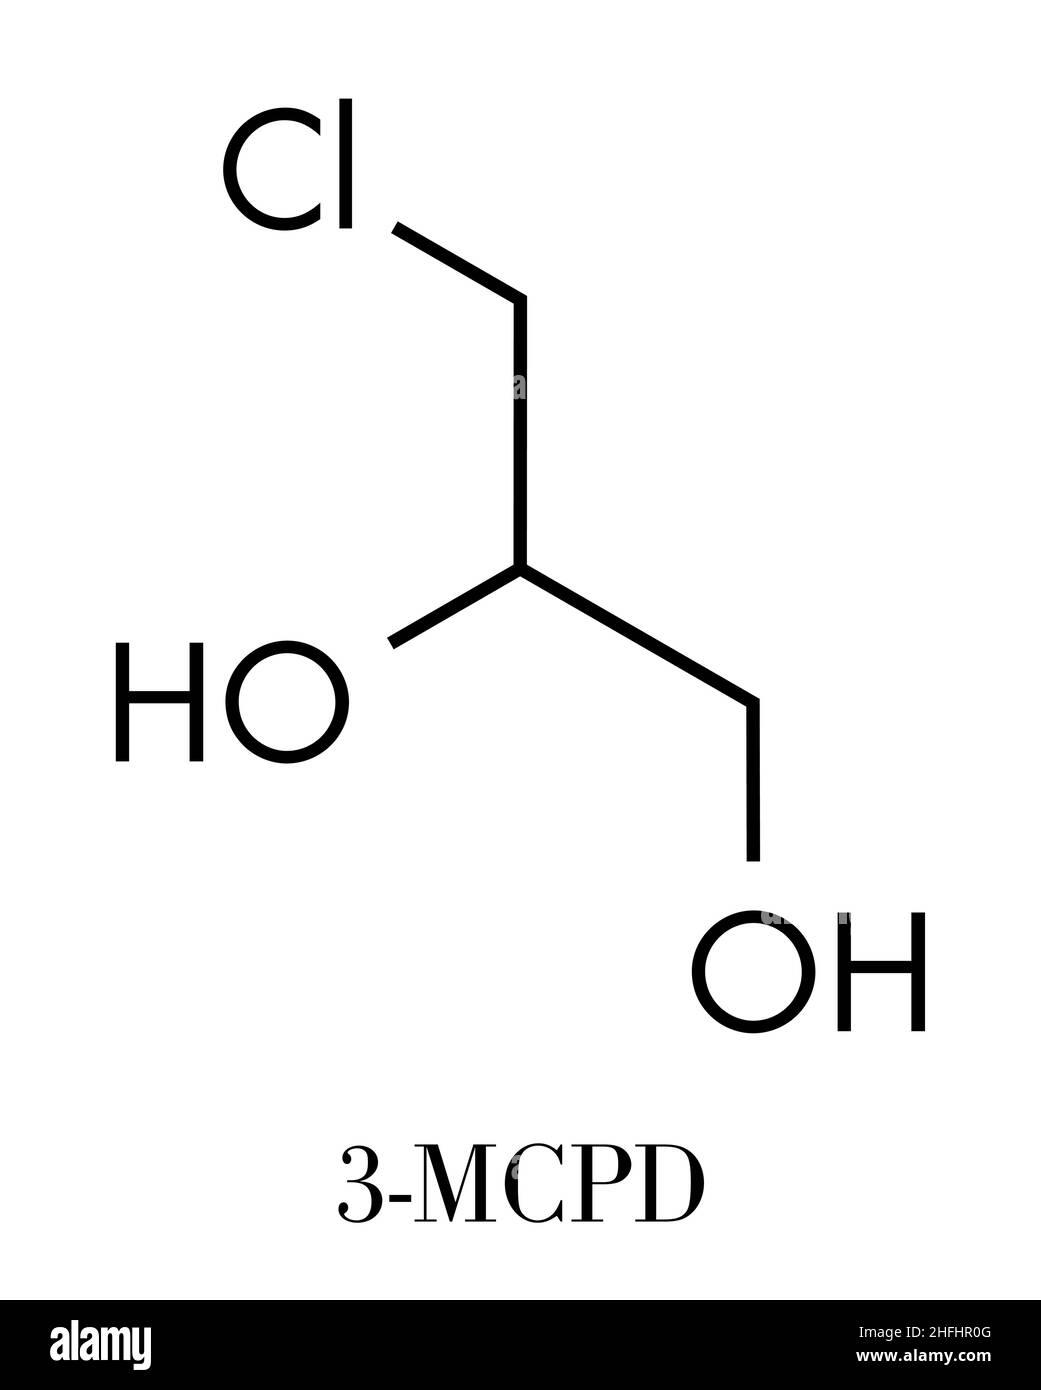 3-MCPD krebserregend Lebensmittel Nebenprodukt Molekül. Erzeugt, wenn Lebensmittel zu beschleunigen Proteinhydrolyse Salzsäure hinzugefügt wird. Skelettformel. Stock Vektor